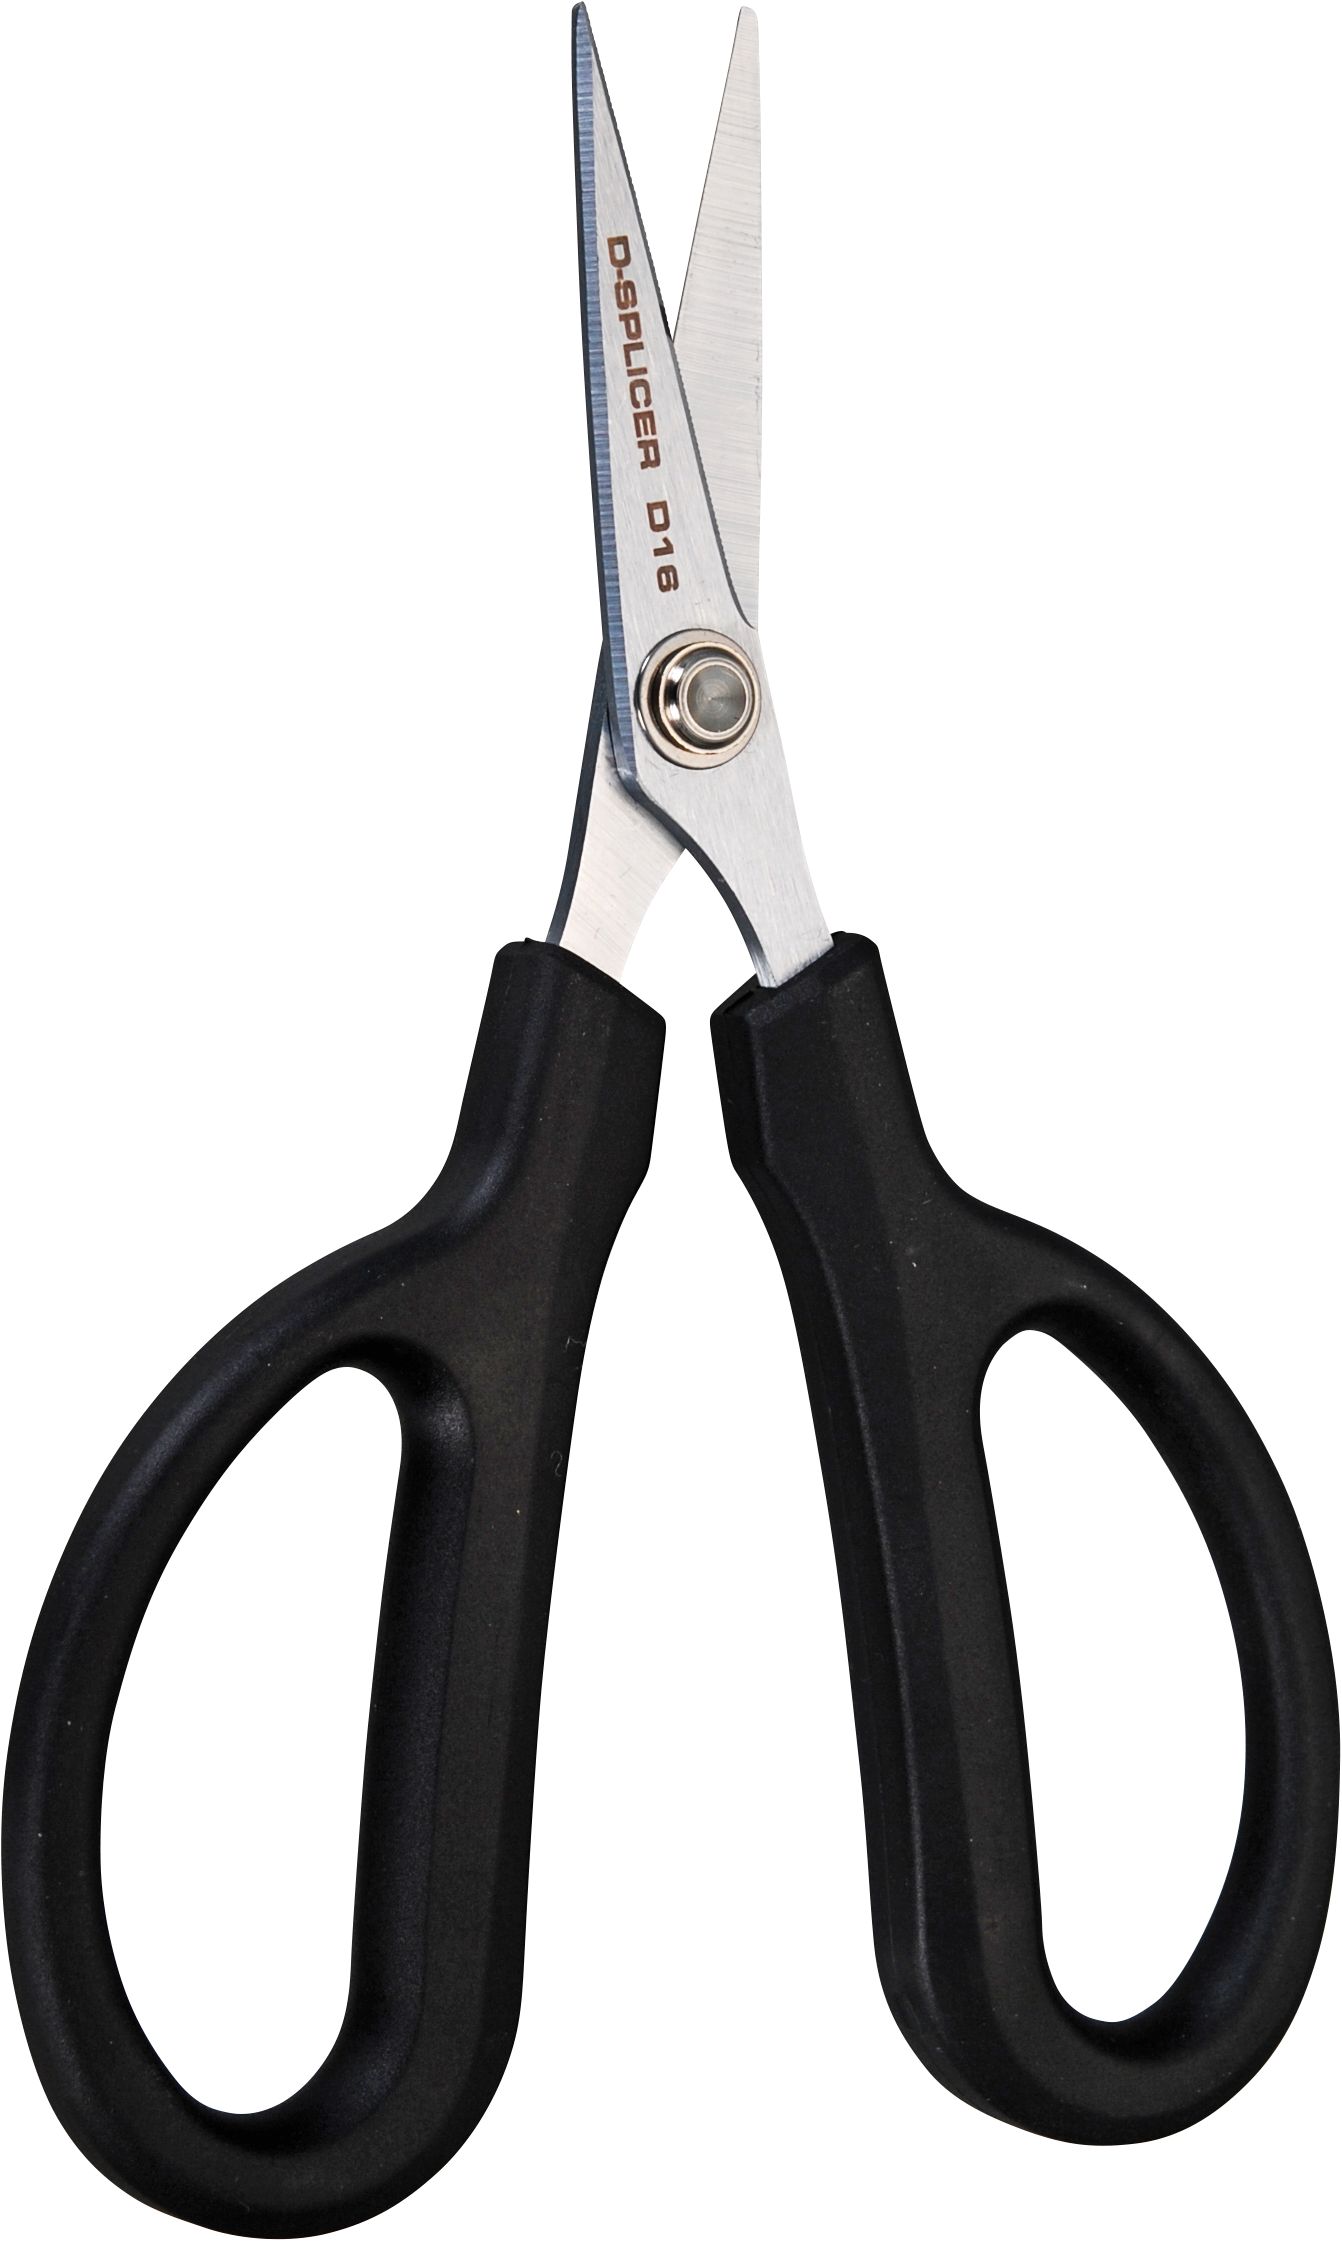 Rigging scissors for DYNEEMA cordage | Toplicht